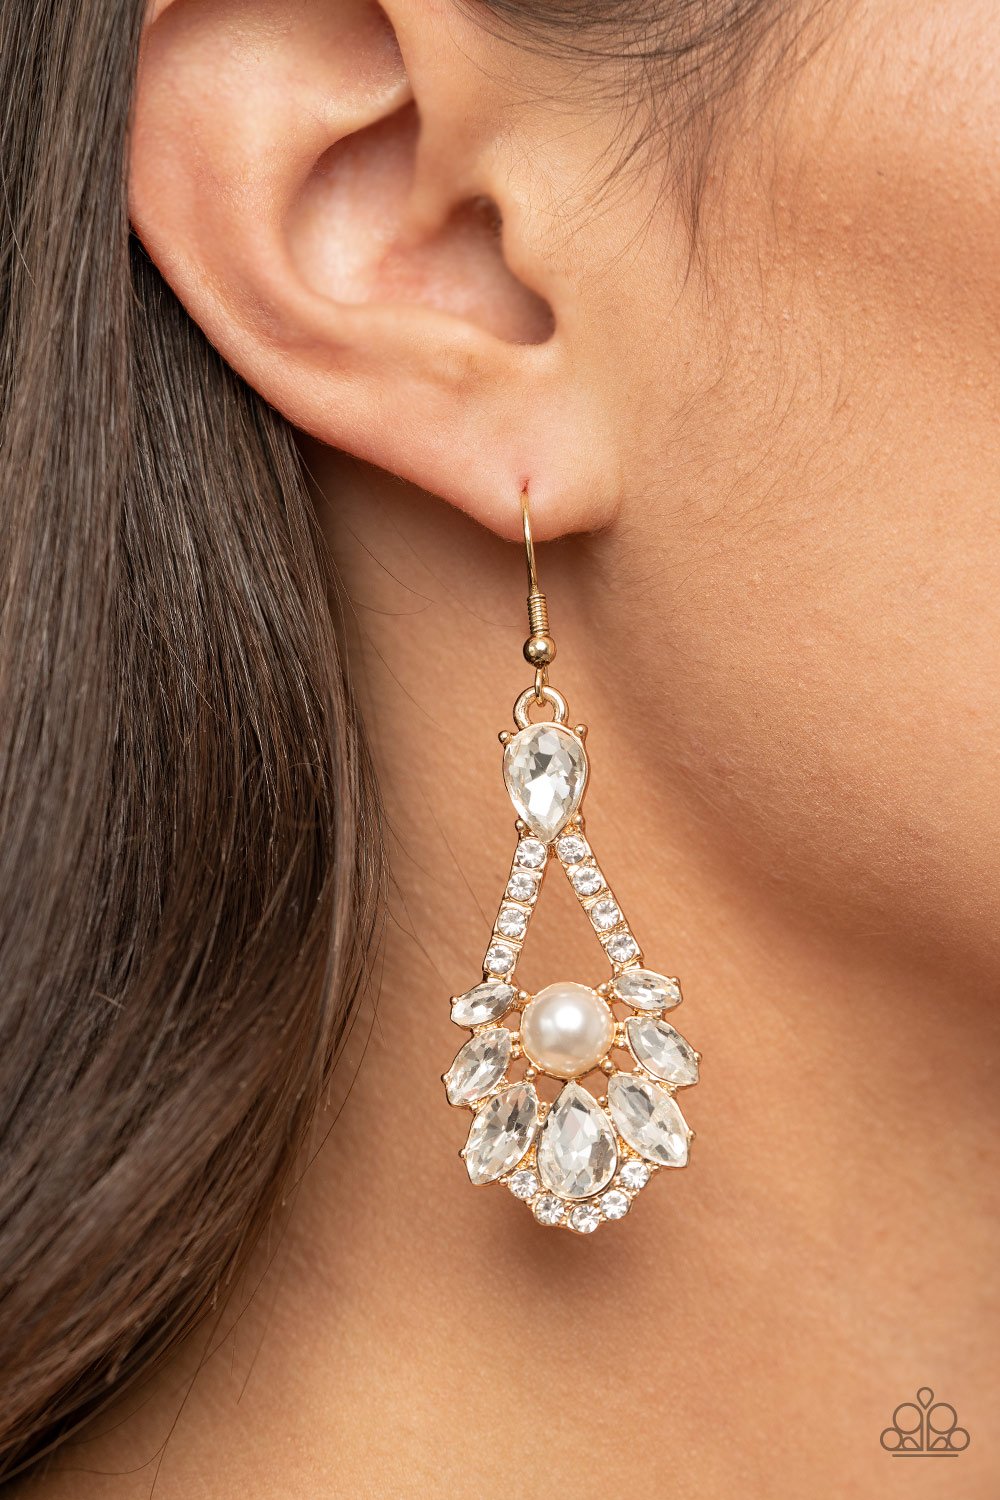 Prismatic Presence - gold earrings